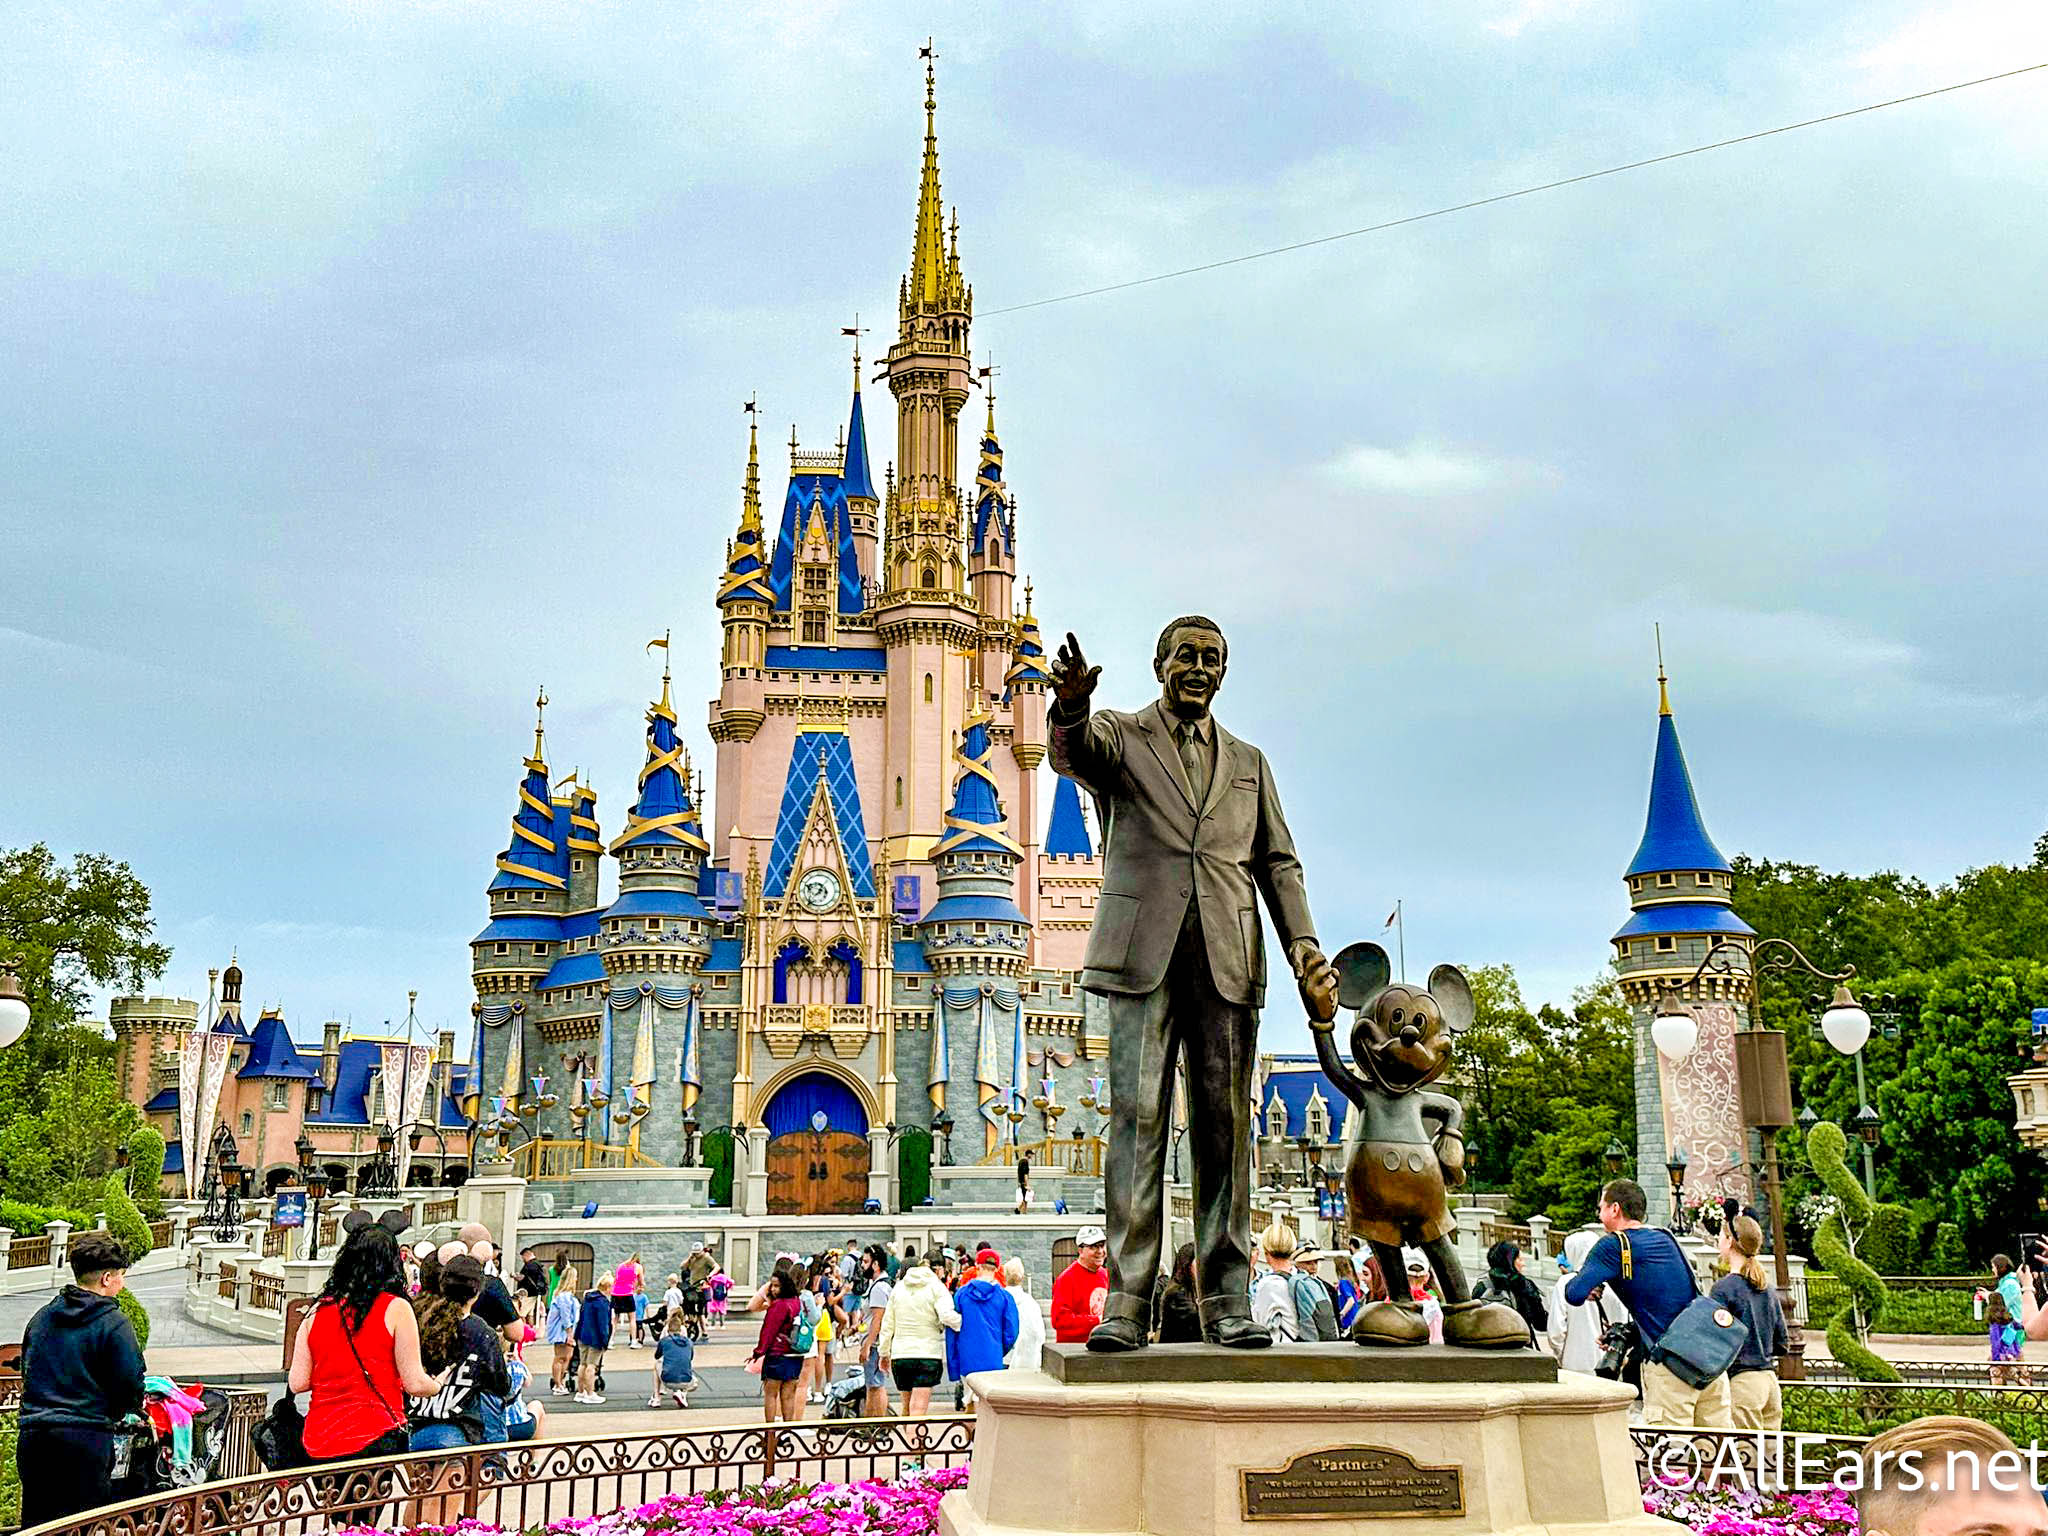 Disney Parks and Orlando Magic extend partnership